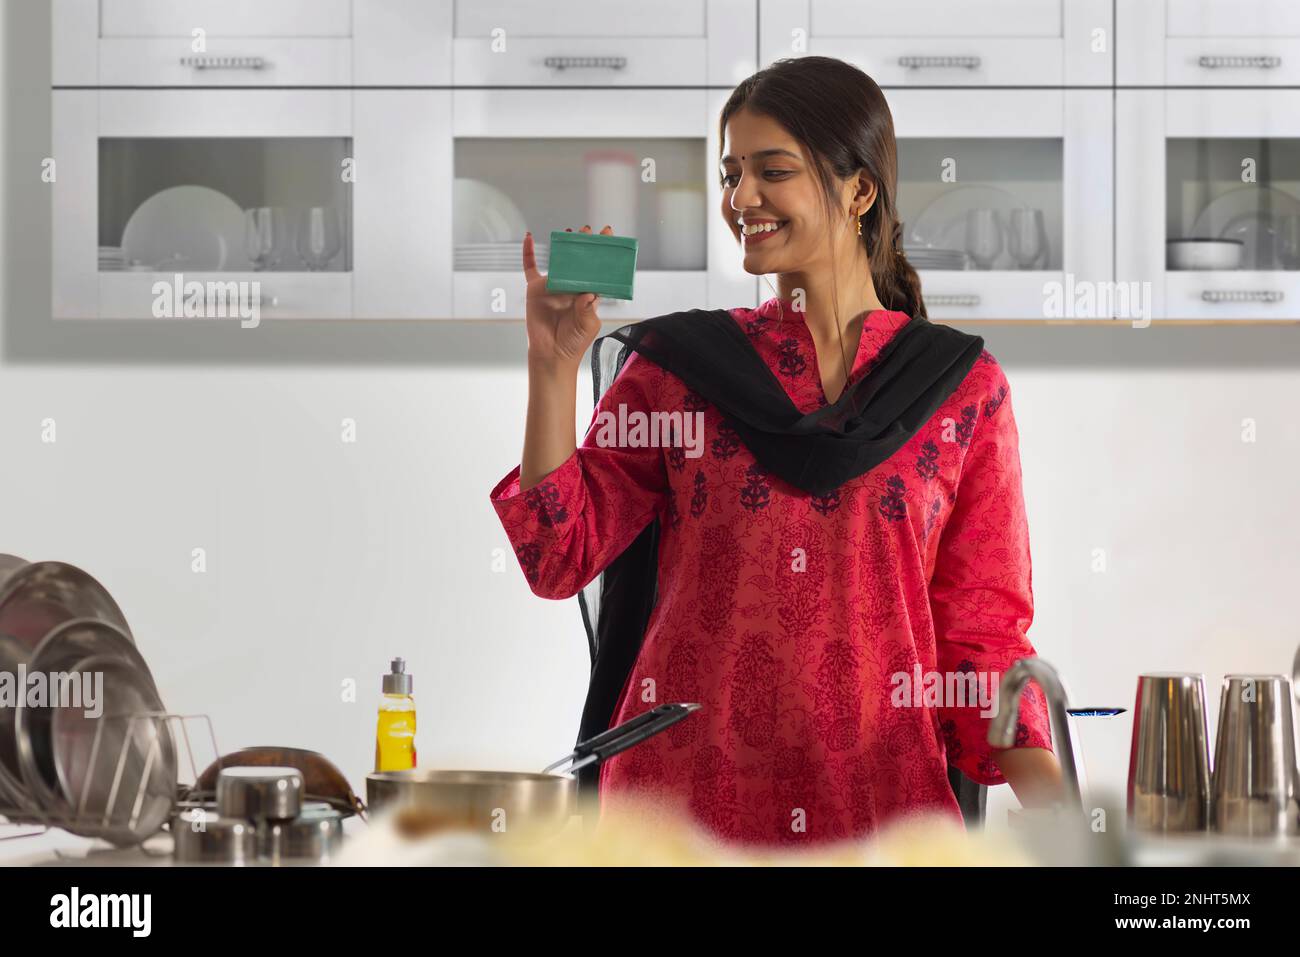 Cheerful woman holding dish wash bar in kitchen Stock Photo